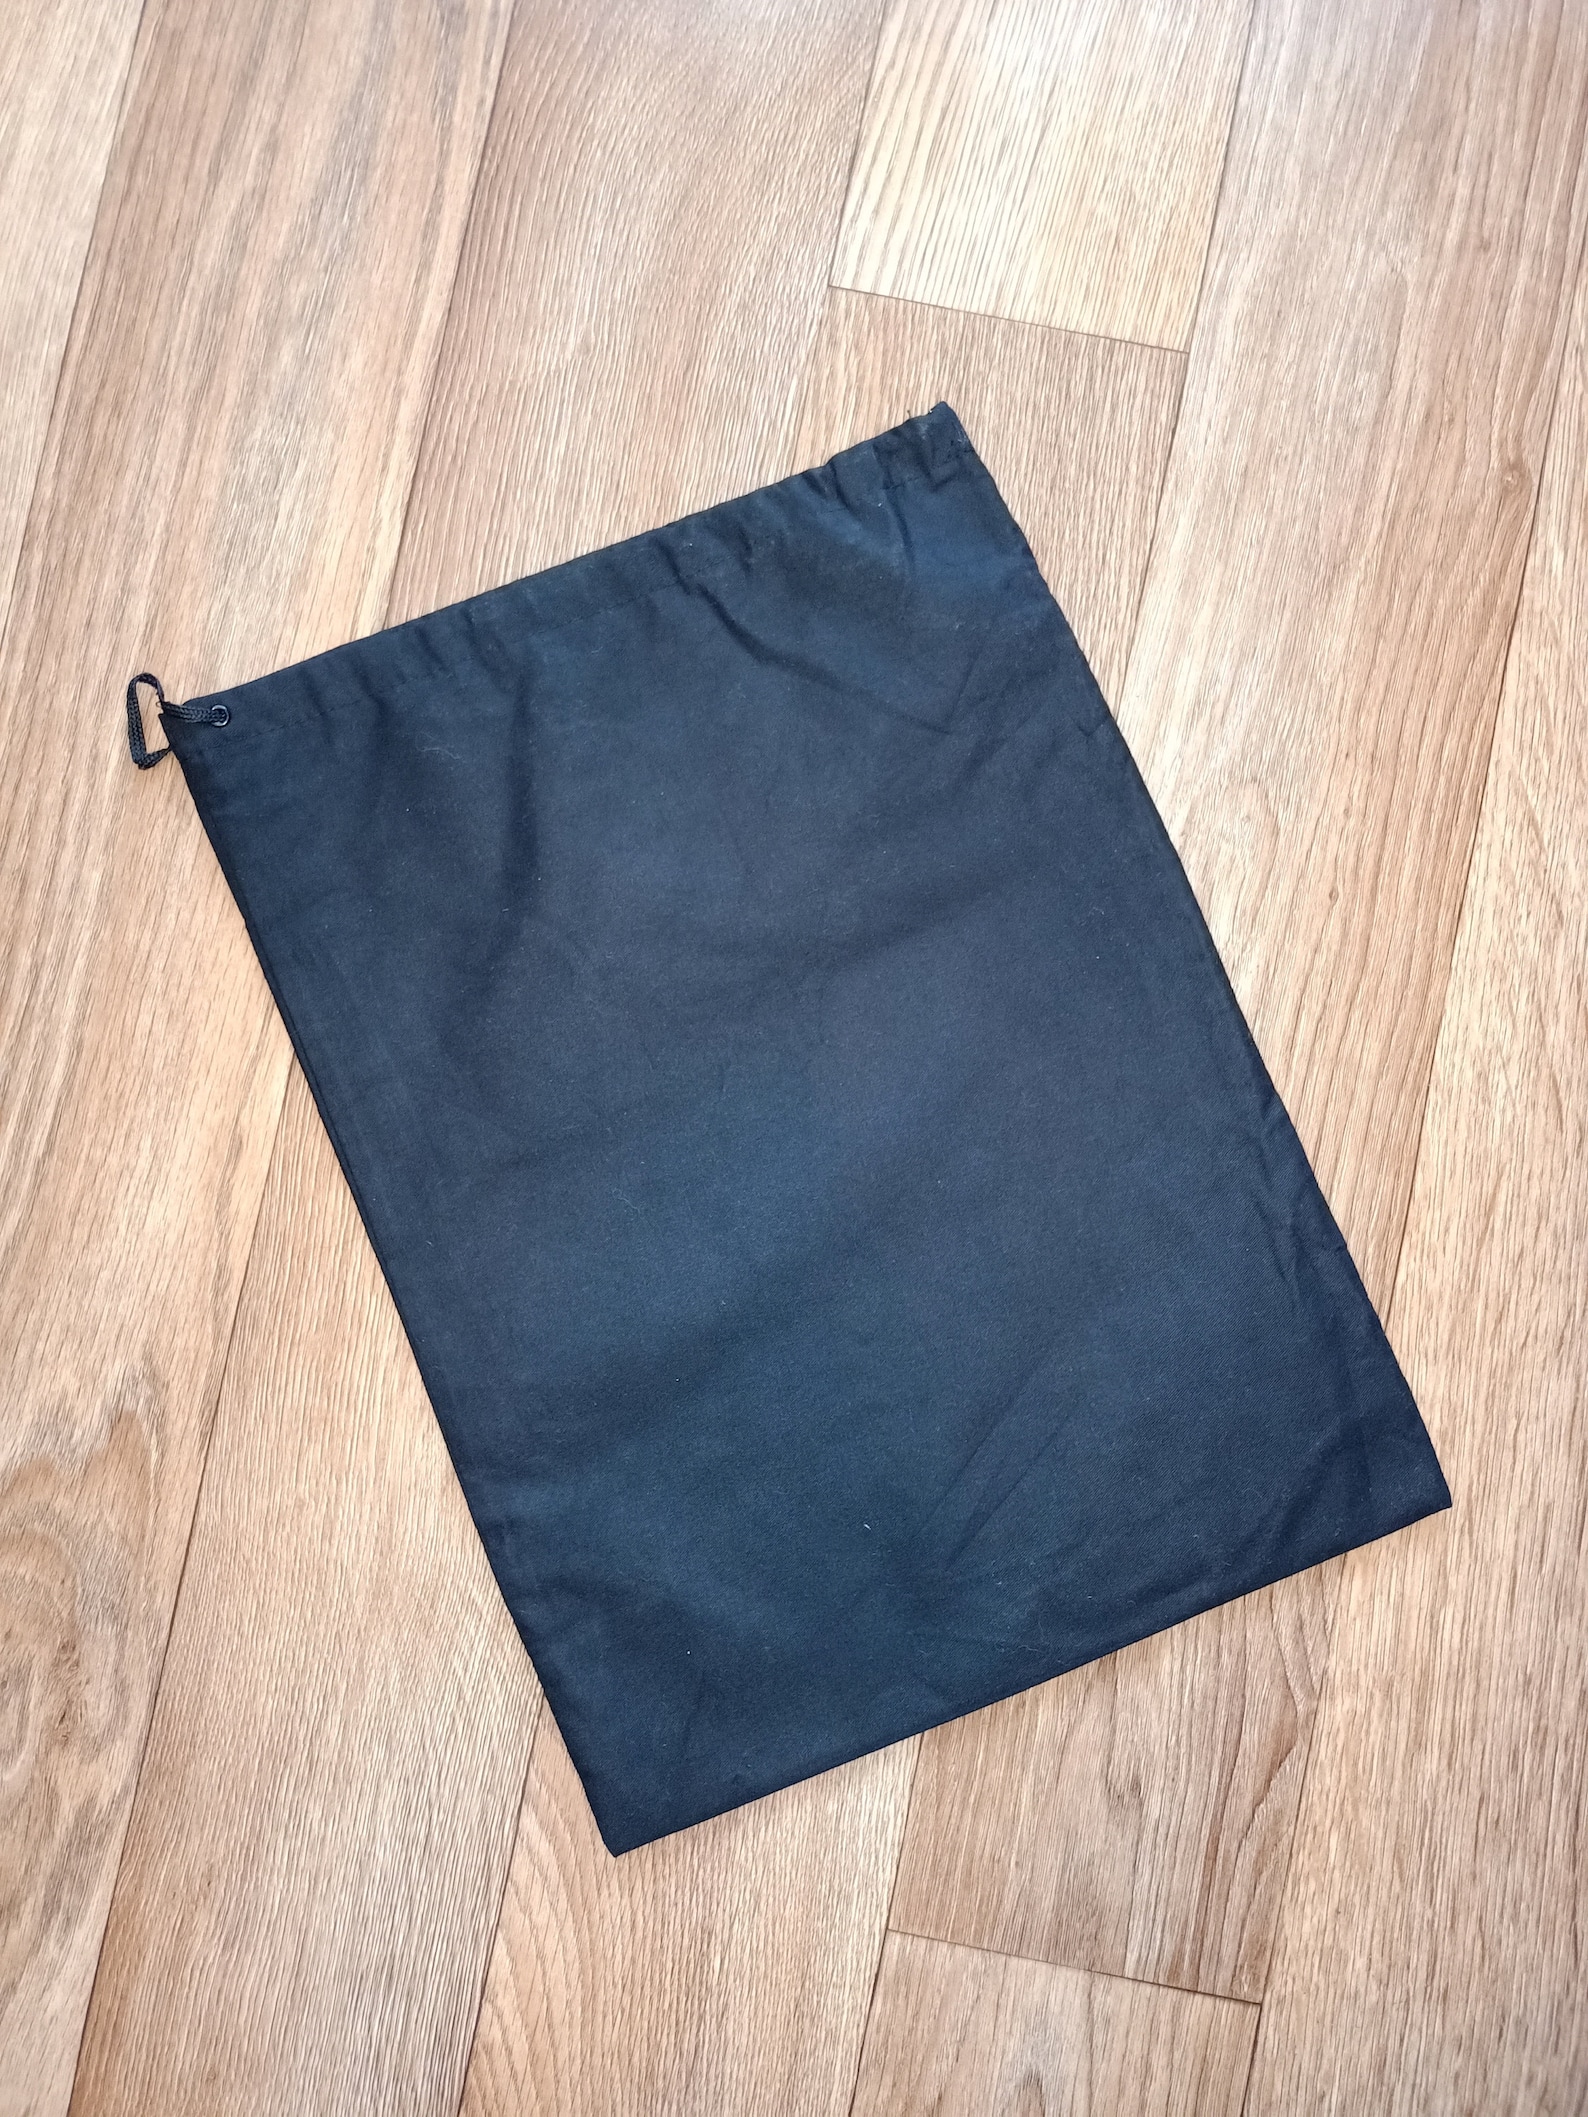 YVES SAINT-LAURENT Dust bag 40cm x 29cm Vintage Ysl dust | Etsy